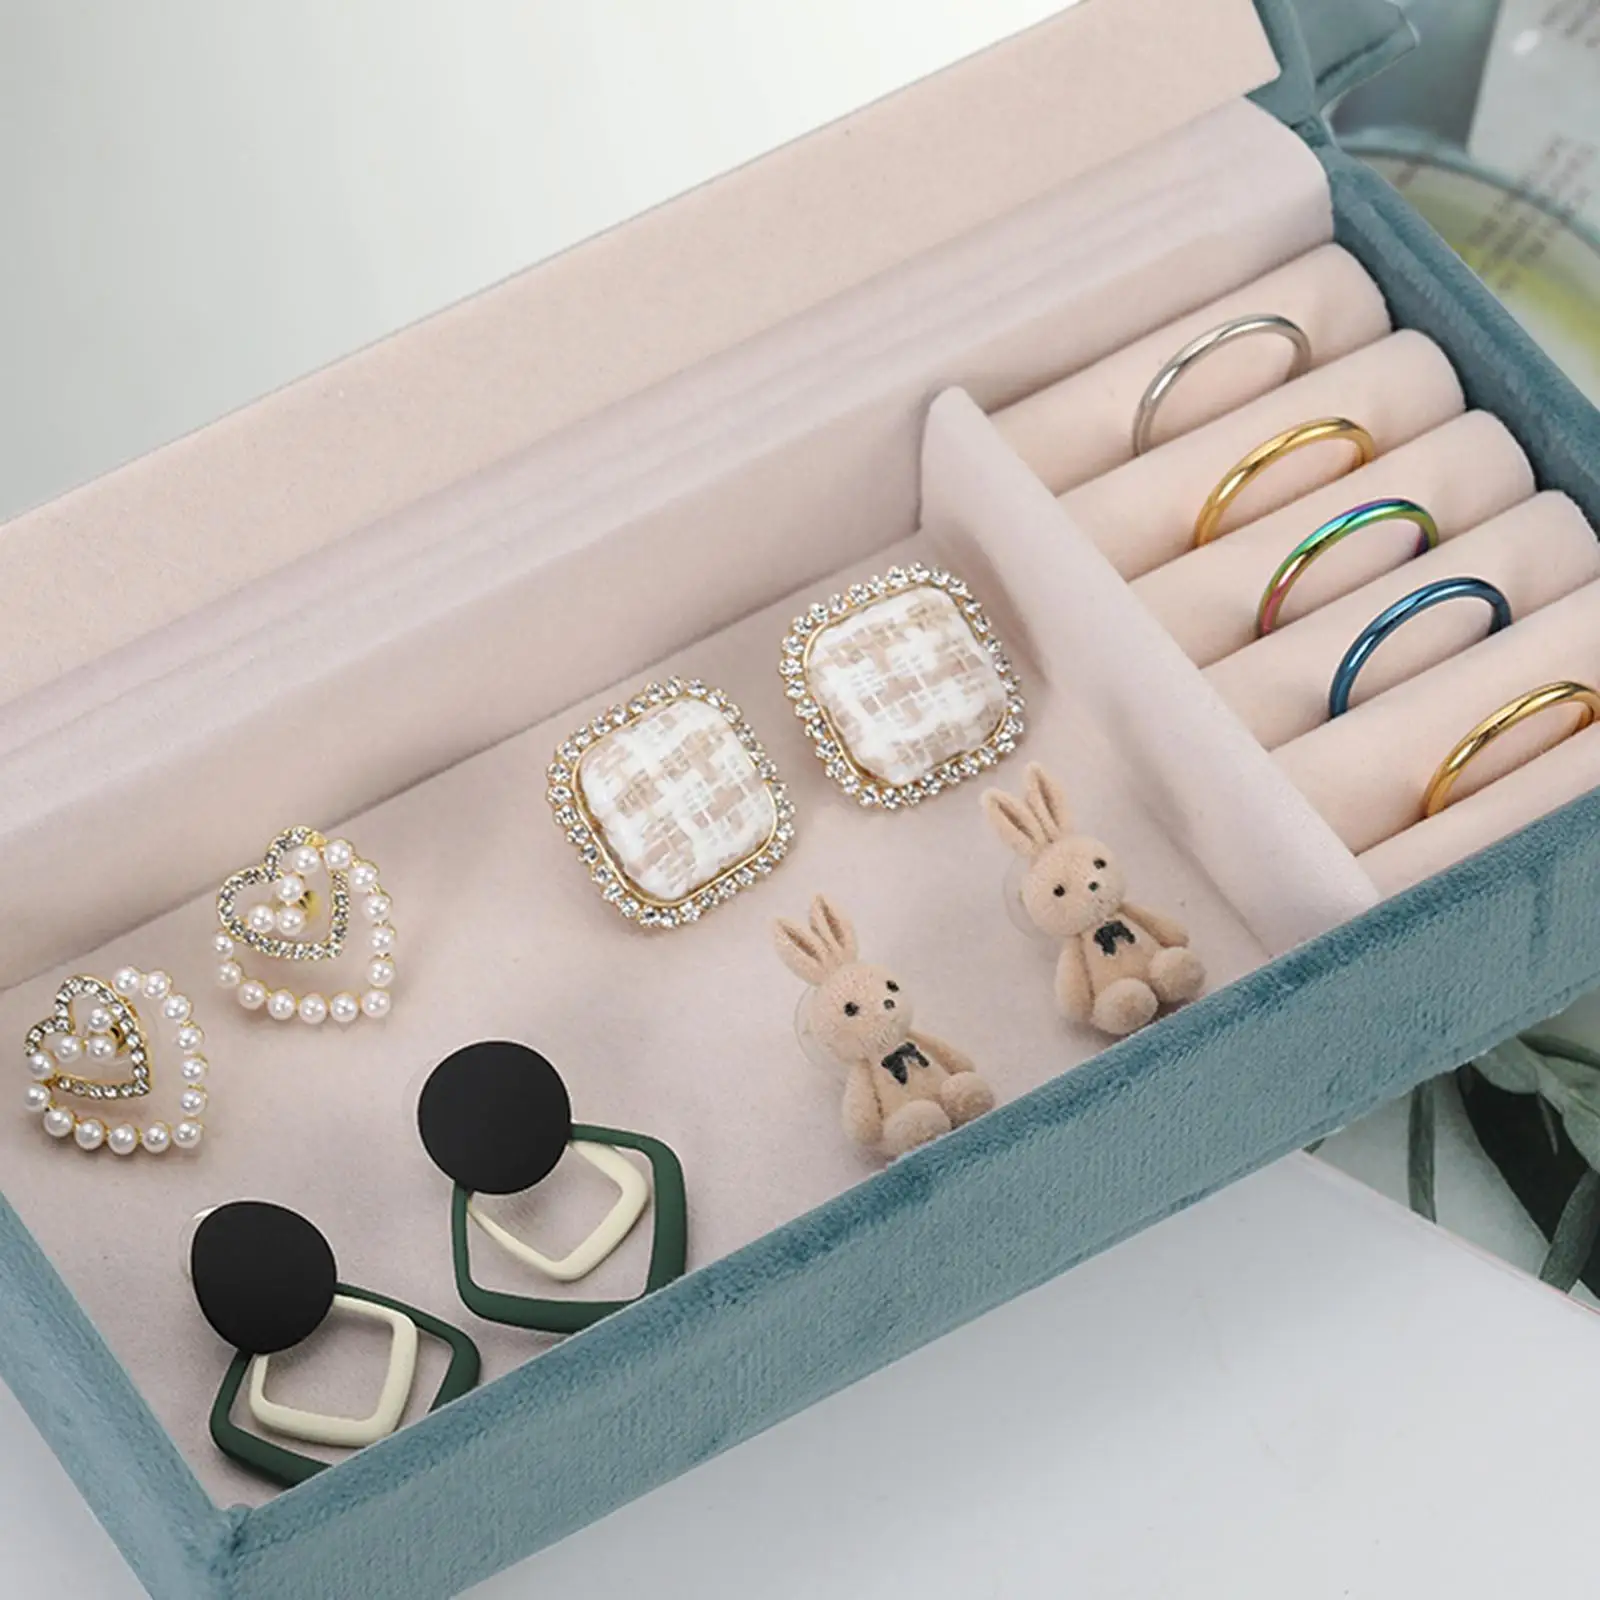 1/6TH Miniature Dollhouse Sofa Jewelry Box Organizer Birthday Gifts Stylish Bedroom Decoration Mini for Pendant Necklace Brooch